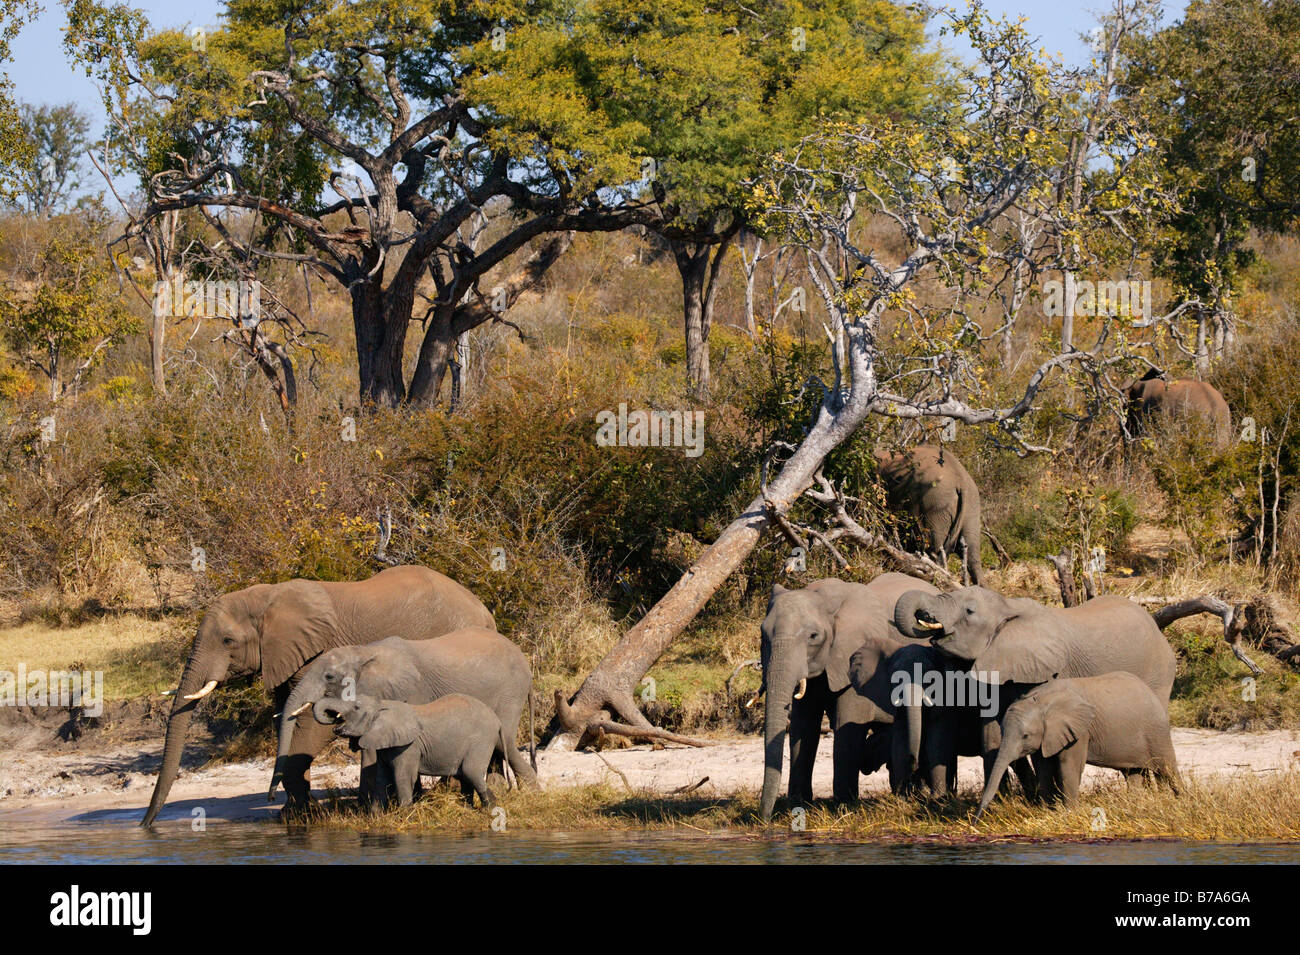 A breeding herd of elephants drinking at the banks of the Zambezi river Stock Photo